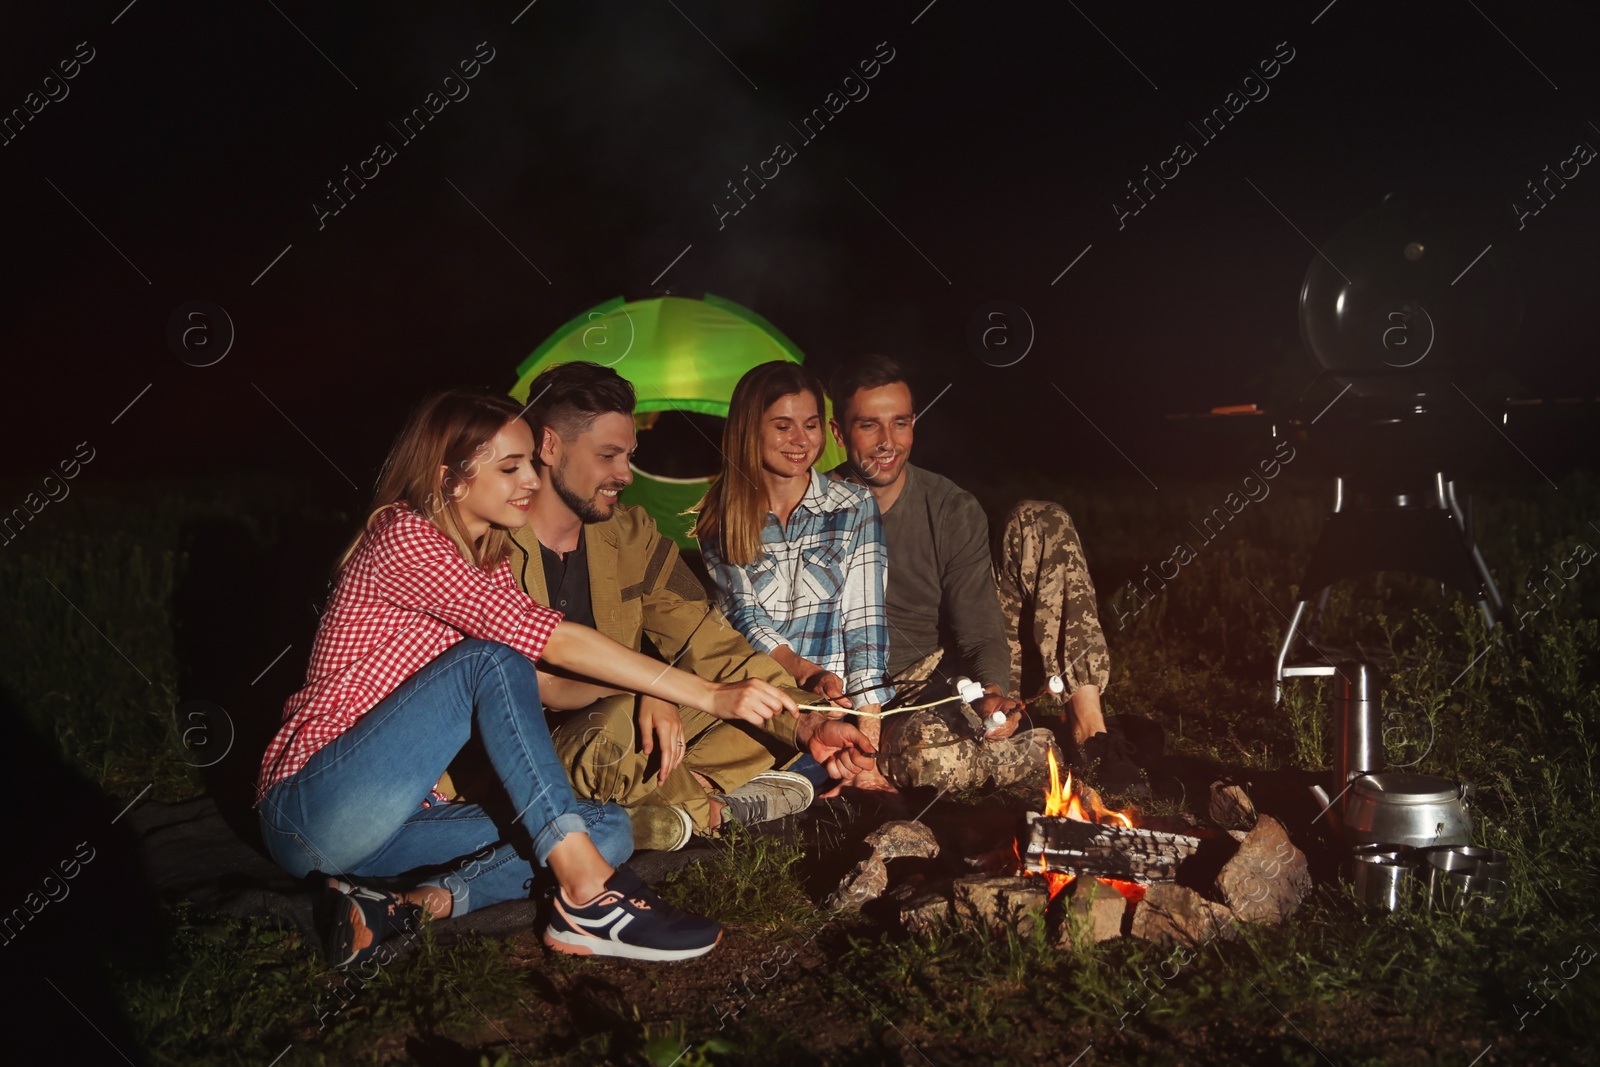 Photo of Friends frying marshmallows on bonfire at night. Camping season